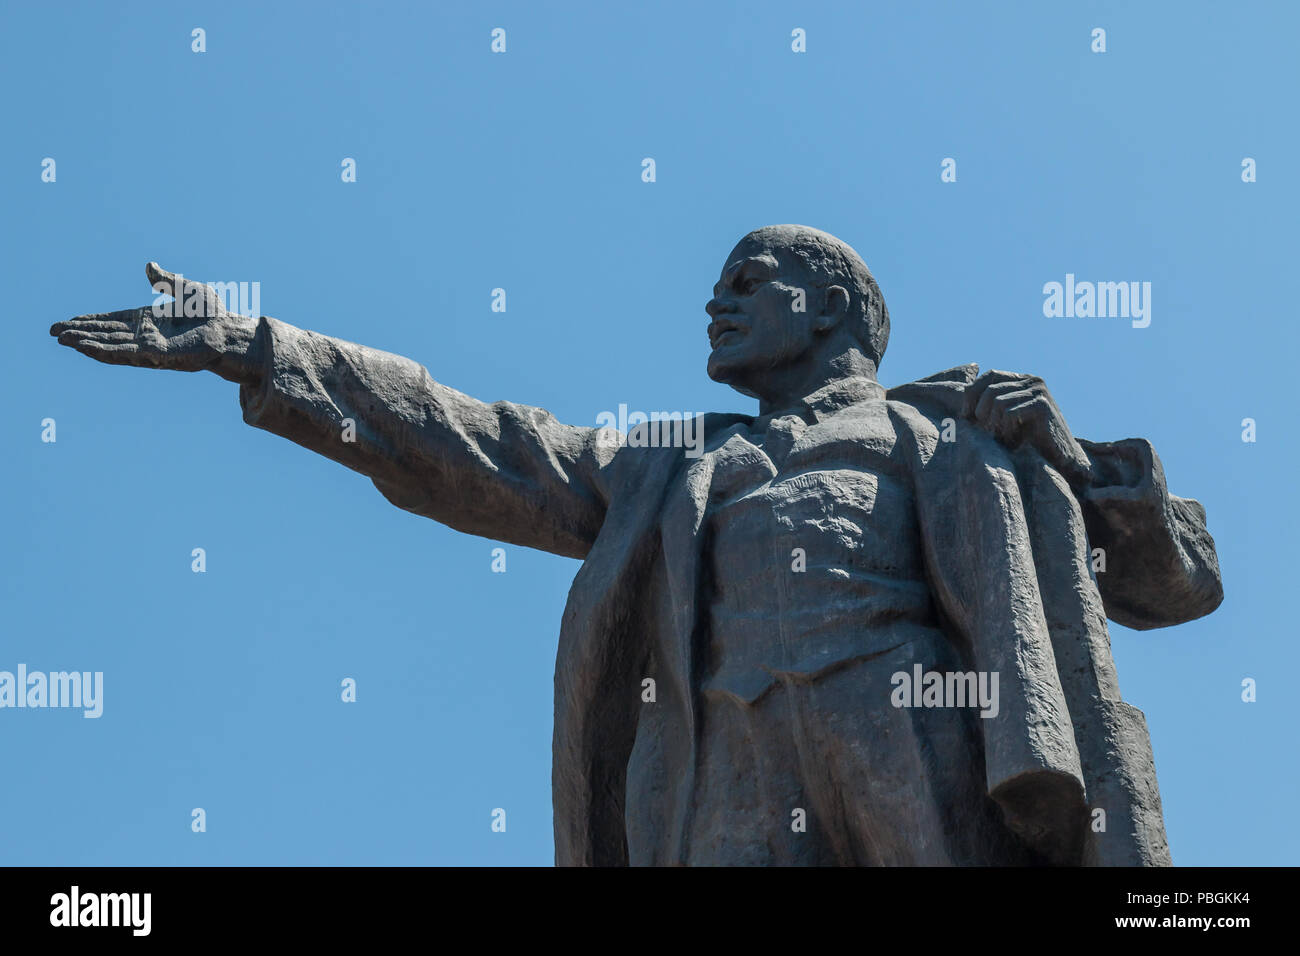 Statue of Vladimir Lenin (Vladimir Ilyich Ulyanov) standing behind Ala Too Square in Bishkek, the capital city of Kyrgyzstan. Stock Photo